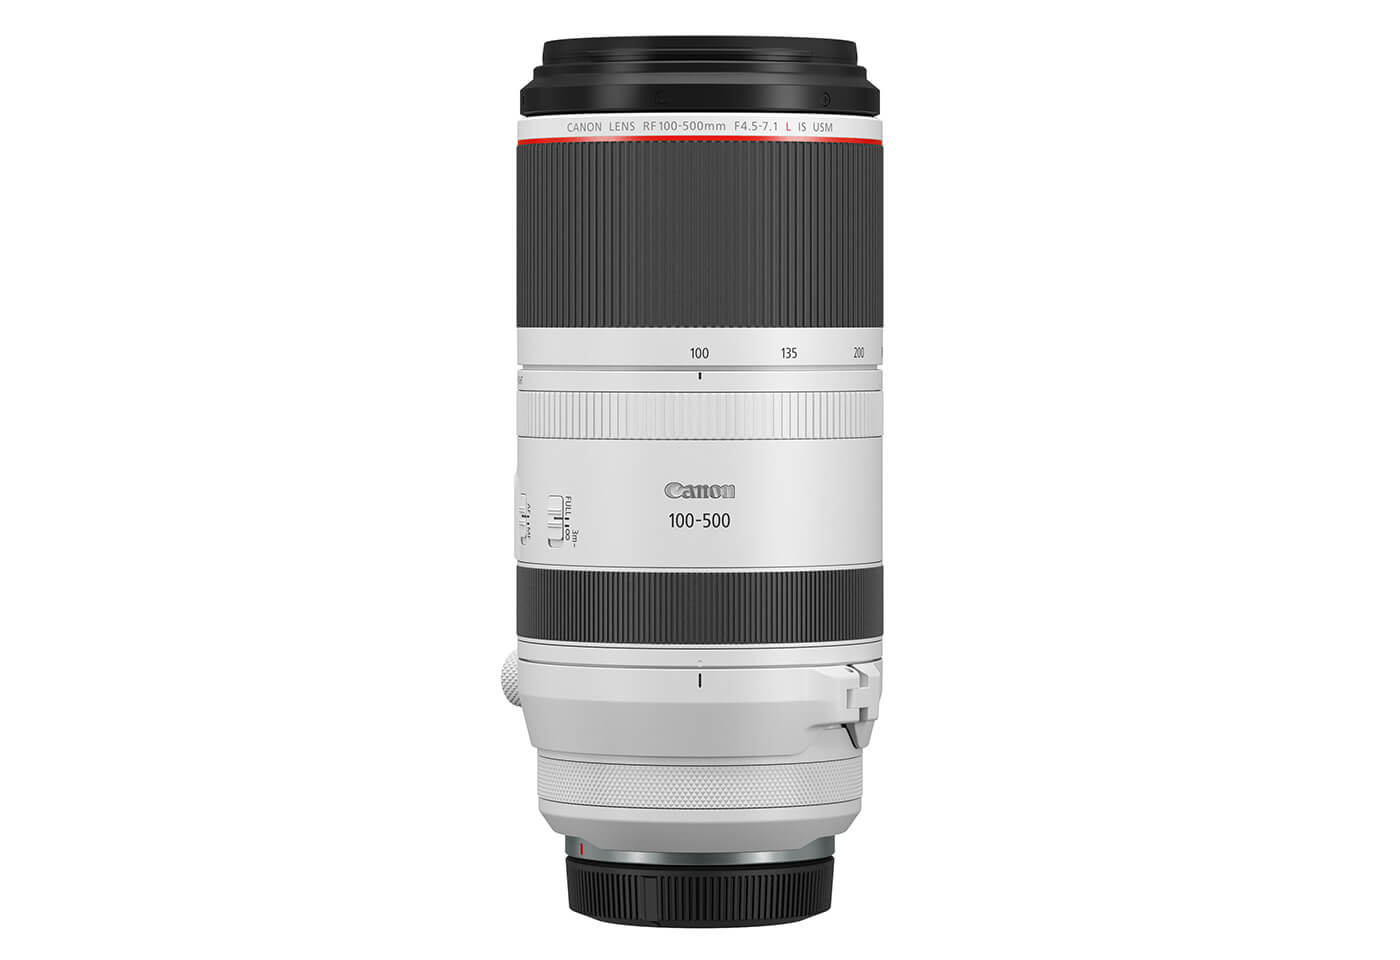 Profile image of RF 100-500mm f/4.5-7.1 L IS USM telephoto lens vertical side